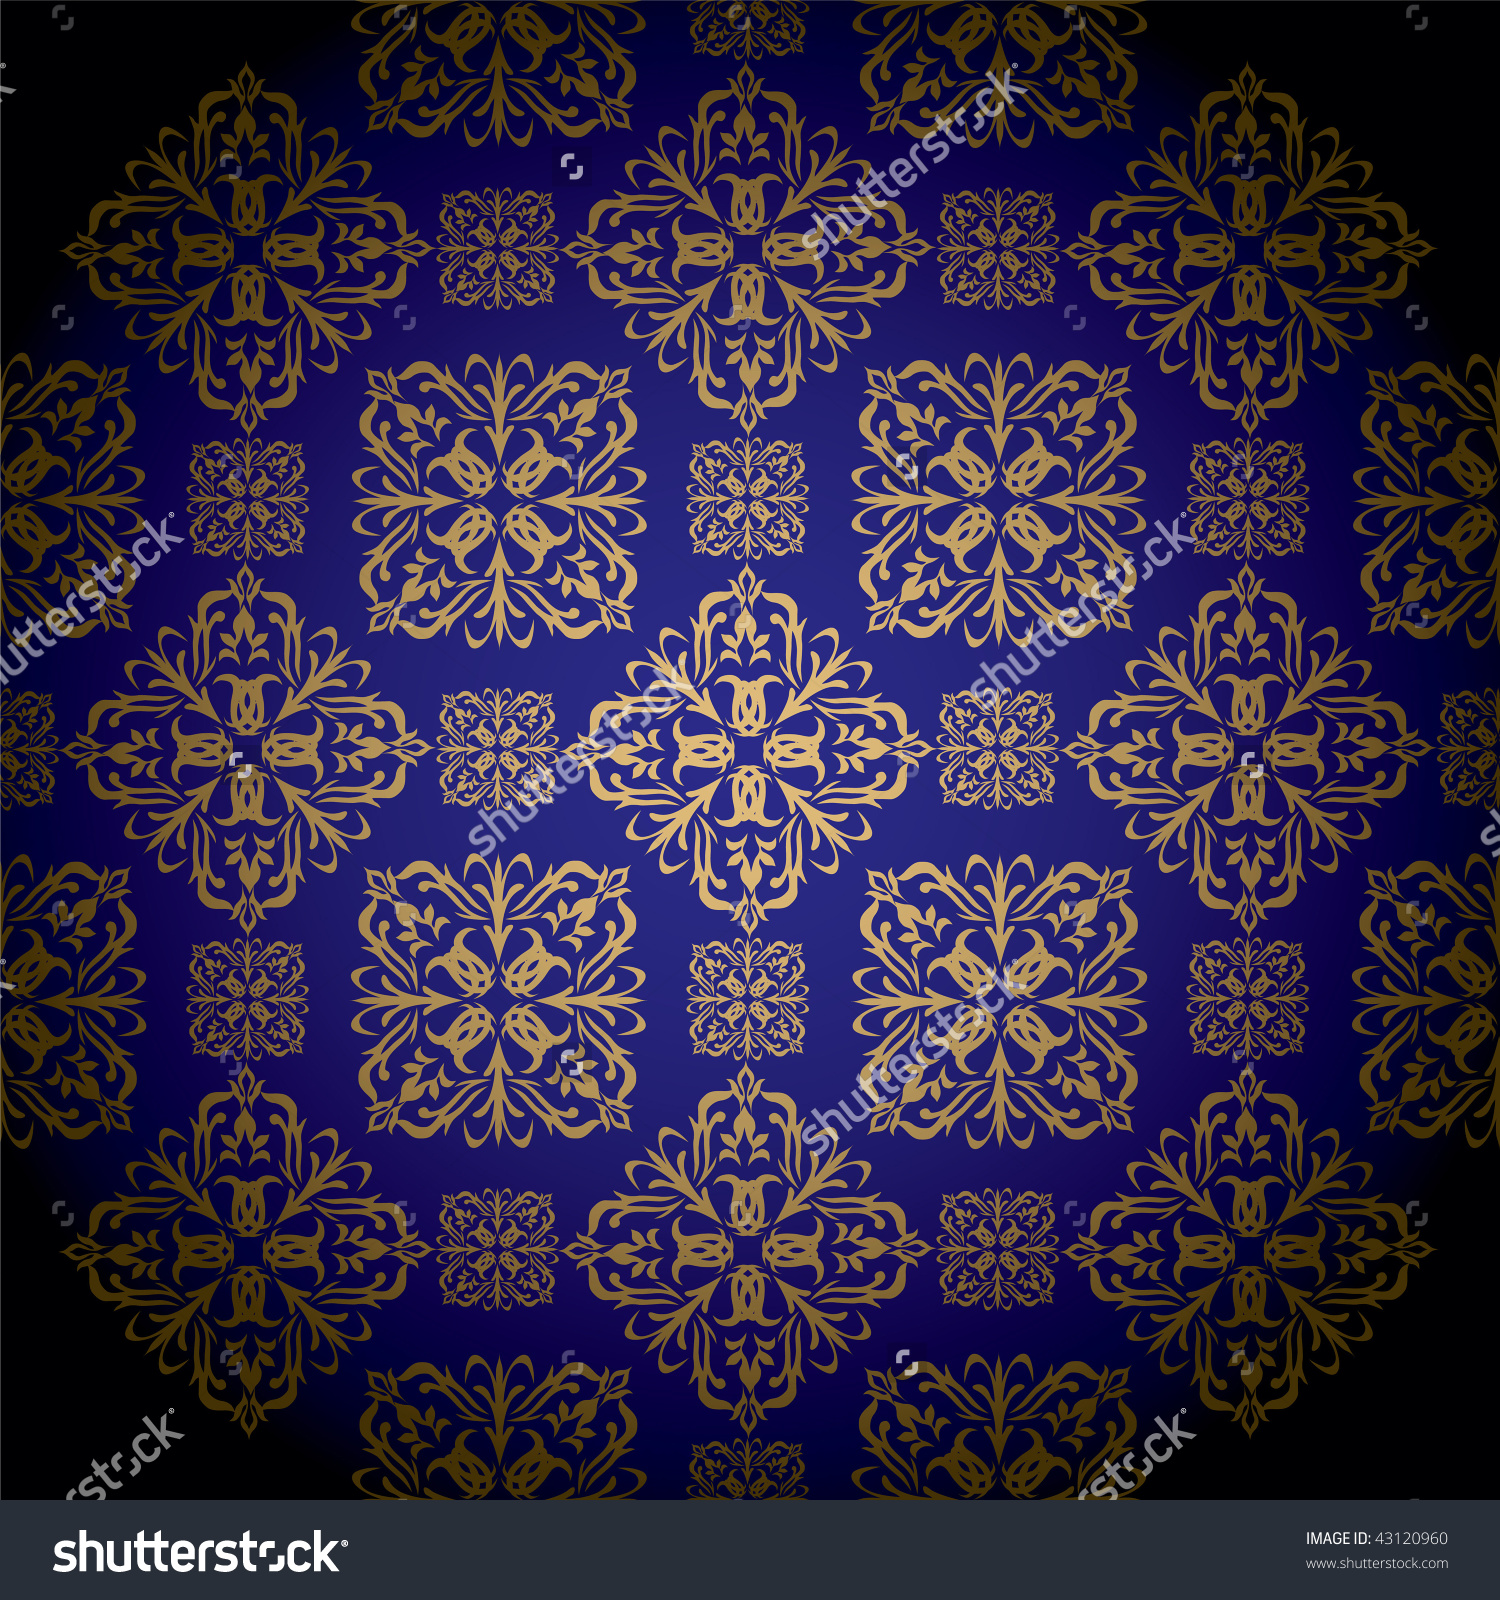 royal wallpaper,pattern,symmetry,design,visual arts,ornament